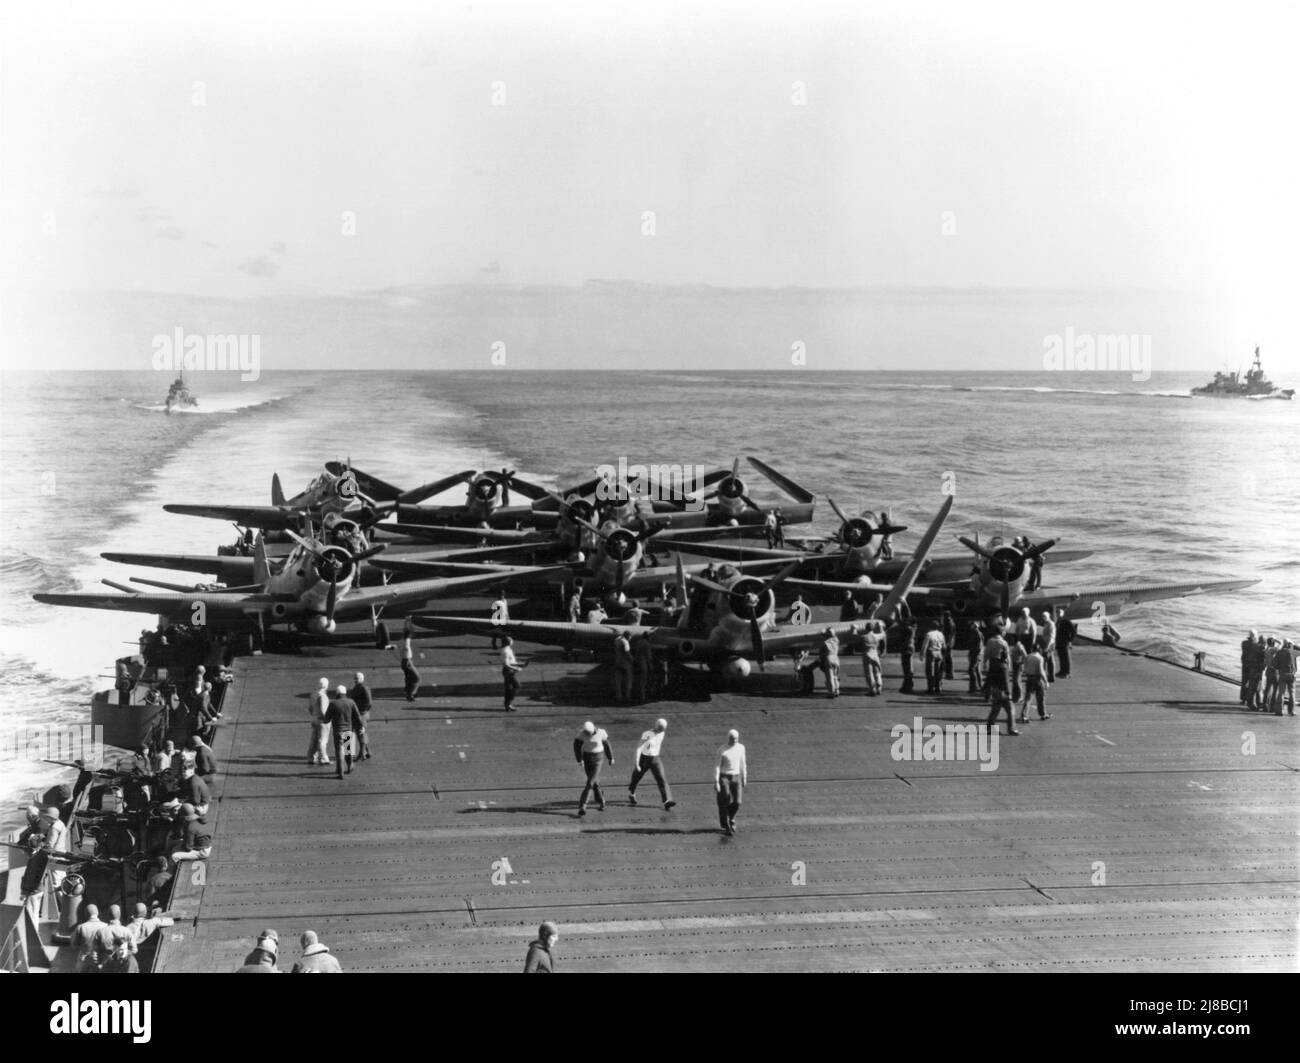 Douglas Devastator torpedo bombers on deck on the USS Enterprise in World War II, Battle of Midway. Stock Photo